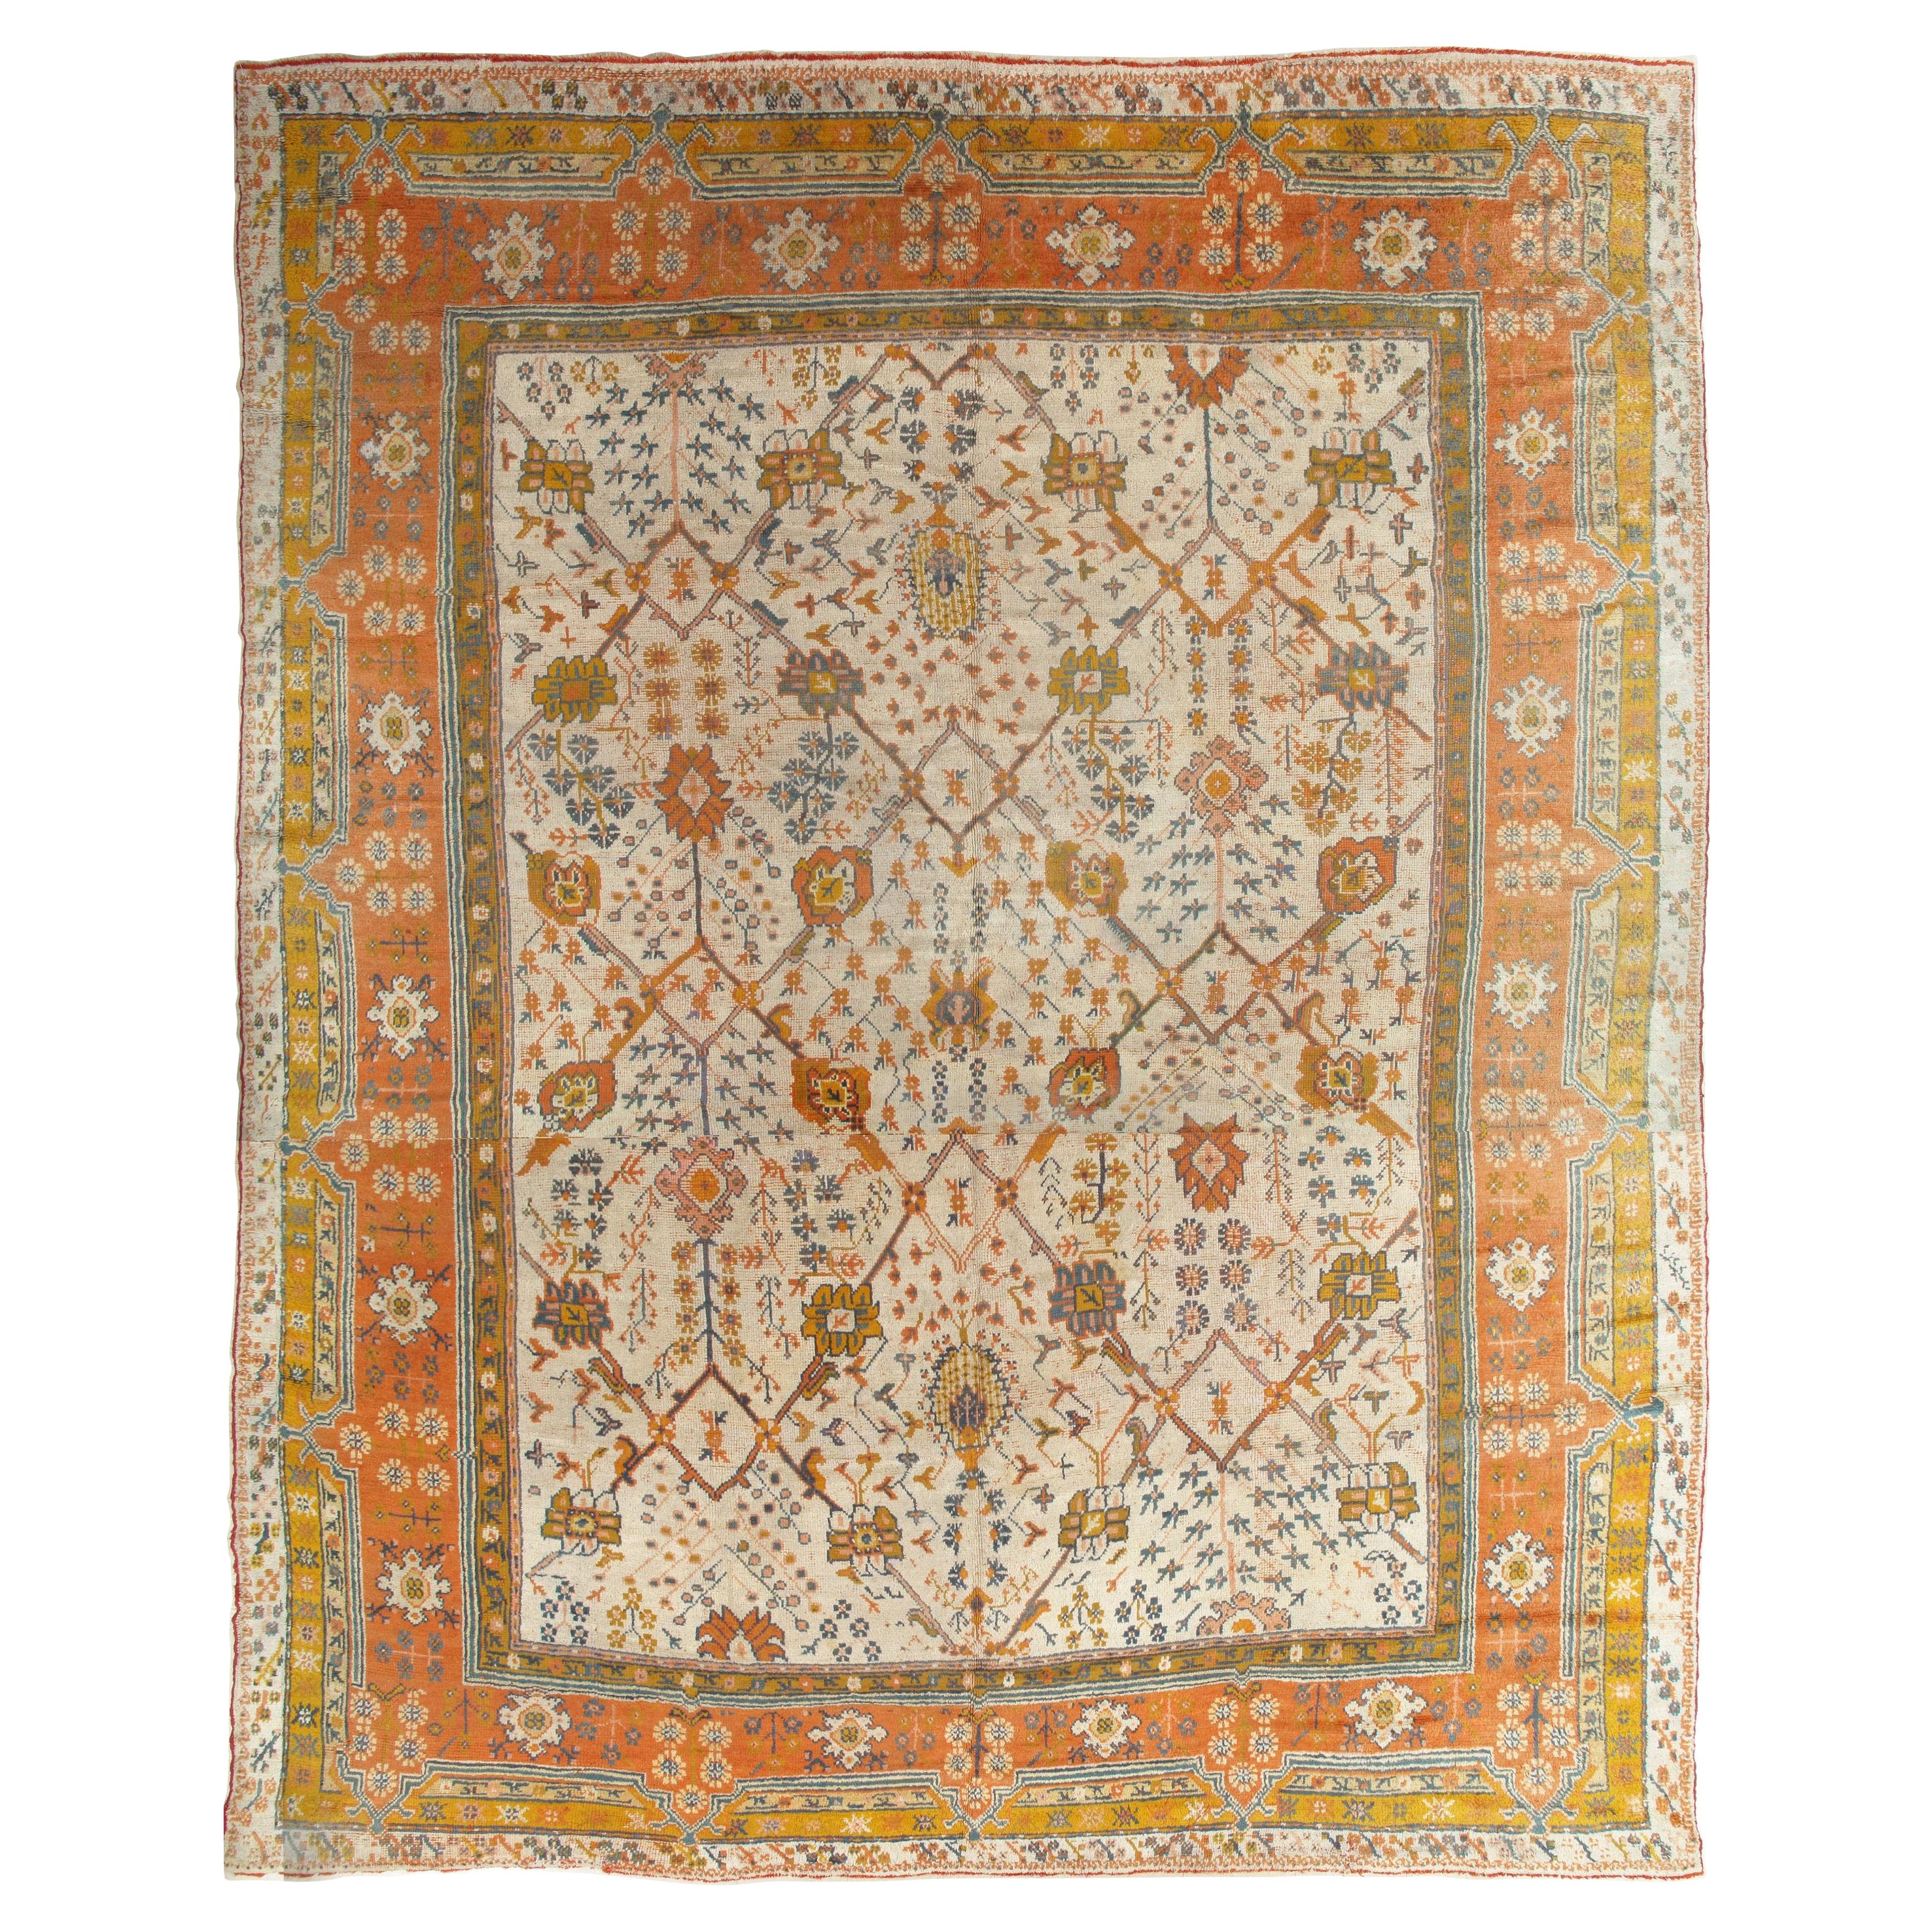 Antique Oushak Carpet, Oriental Rug, Handmade Ivory, Muted Orange, Soft Saffron